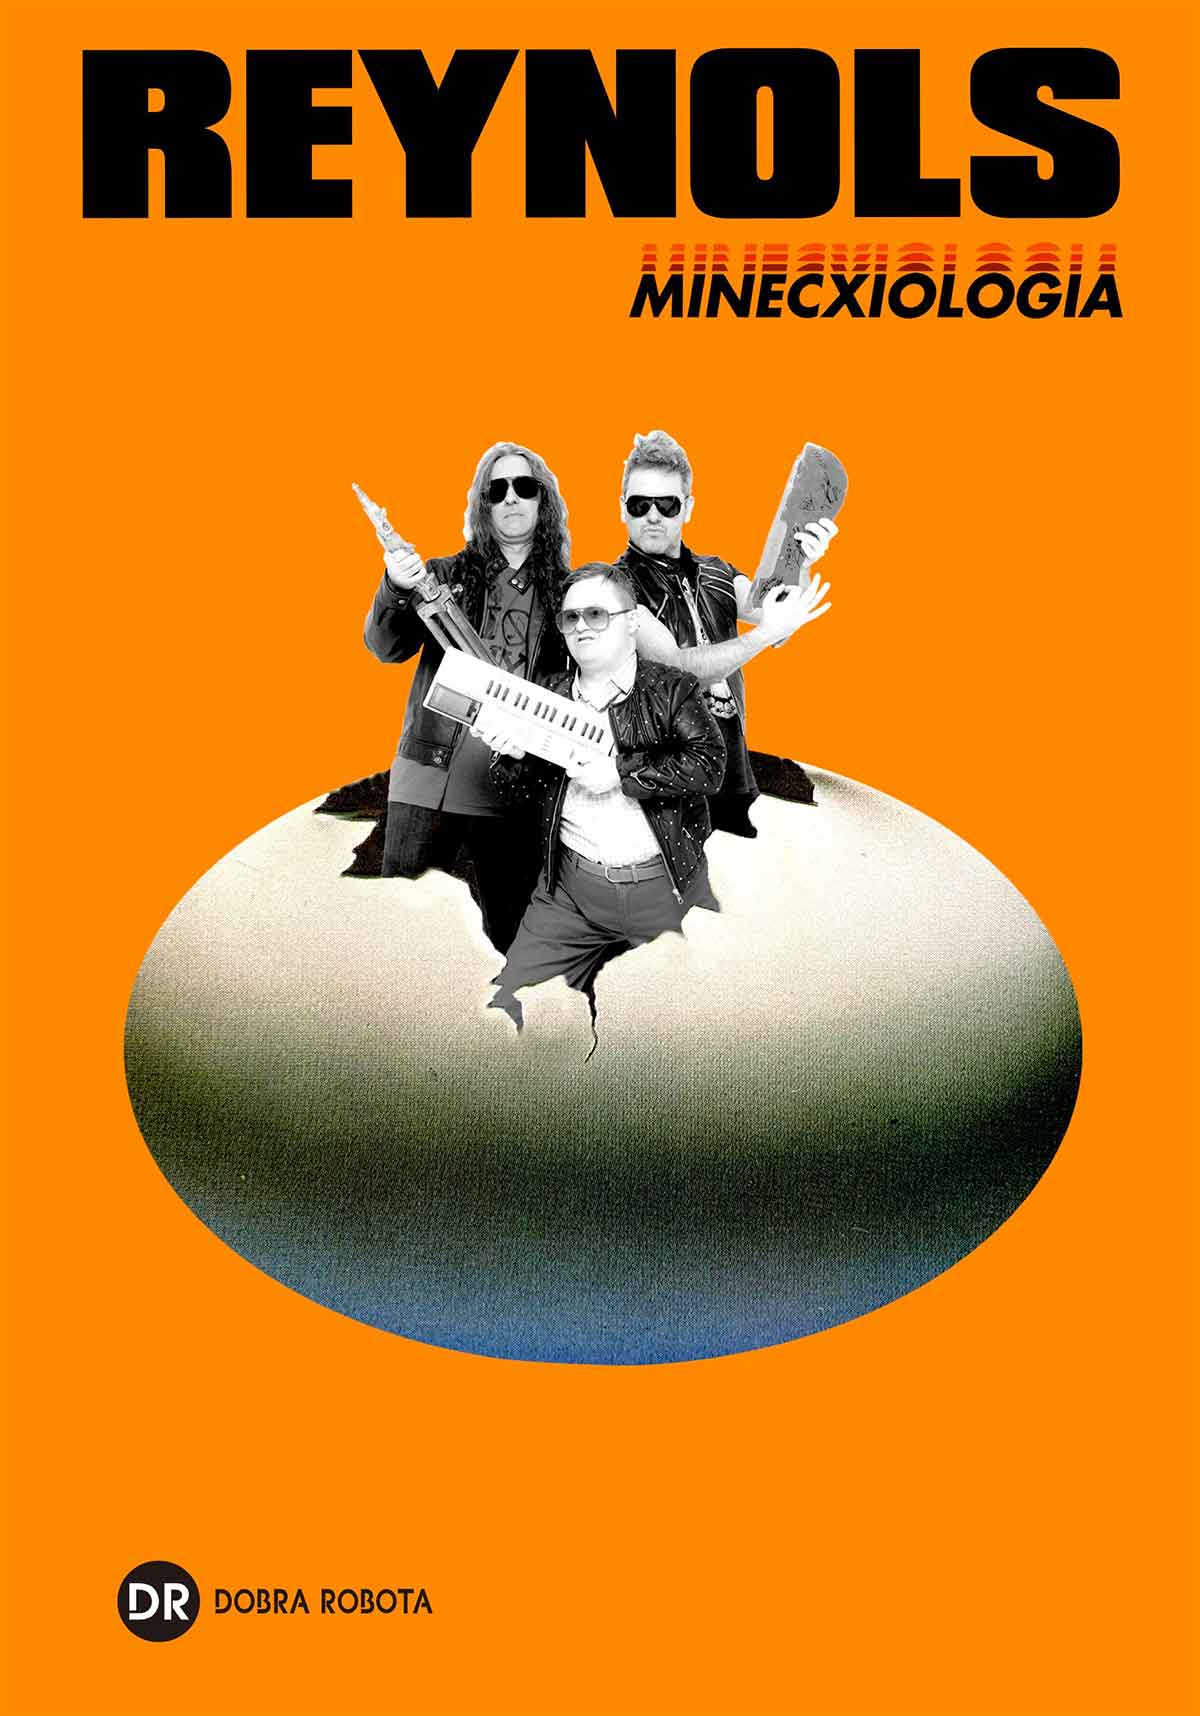 Tapa de "Reynols: Minecxiología", libro editado por Dobra Robota